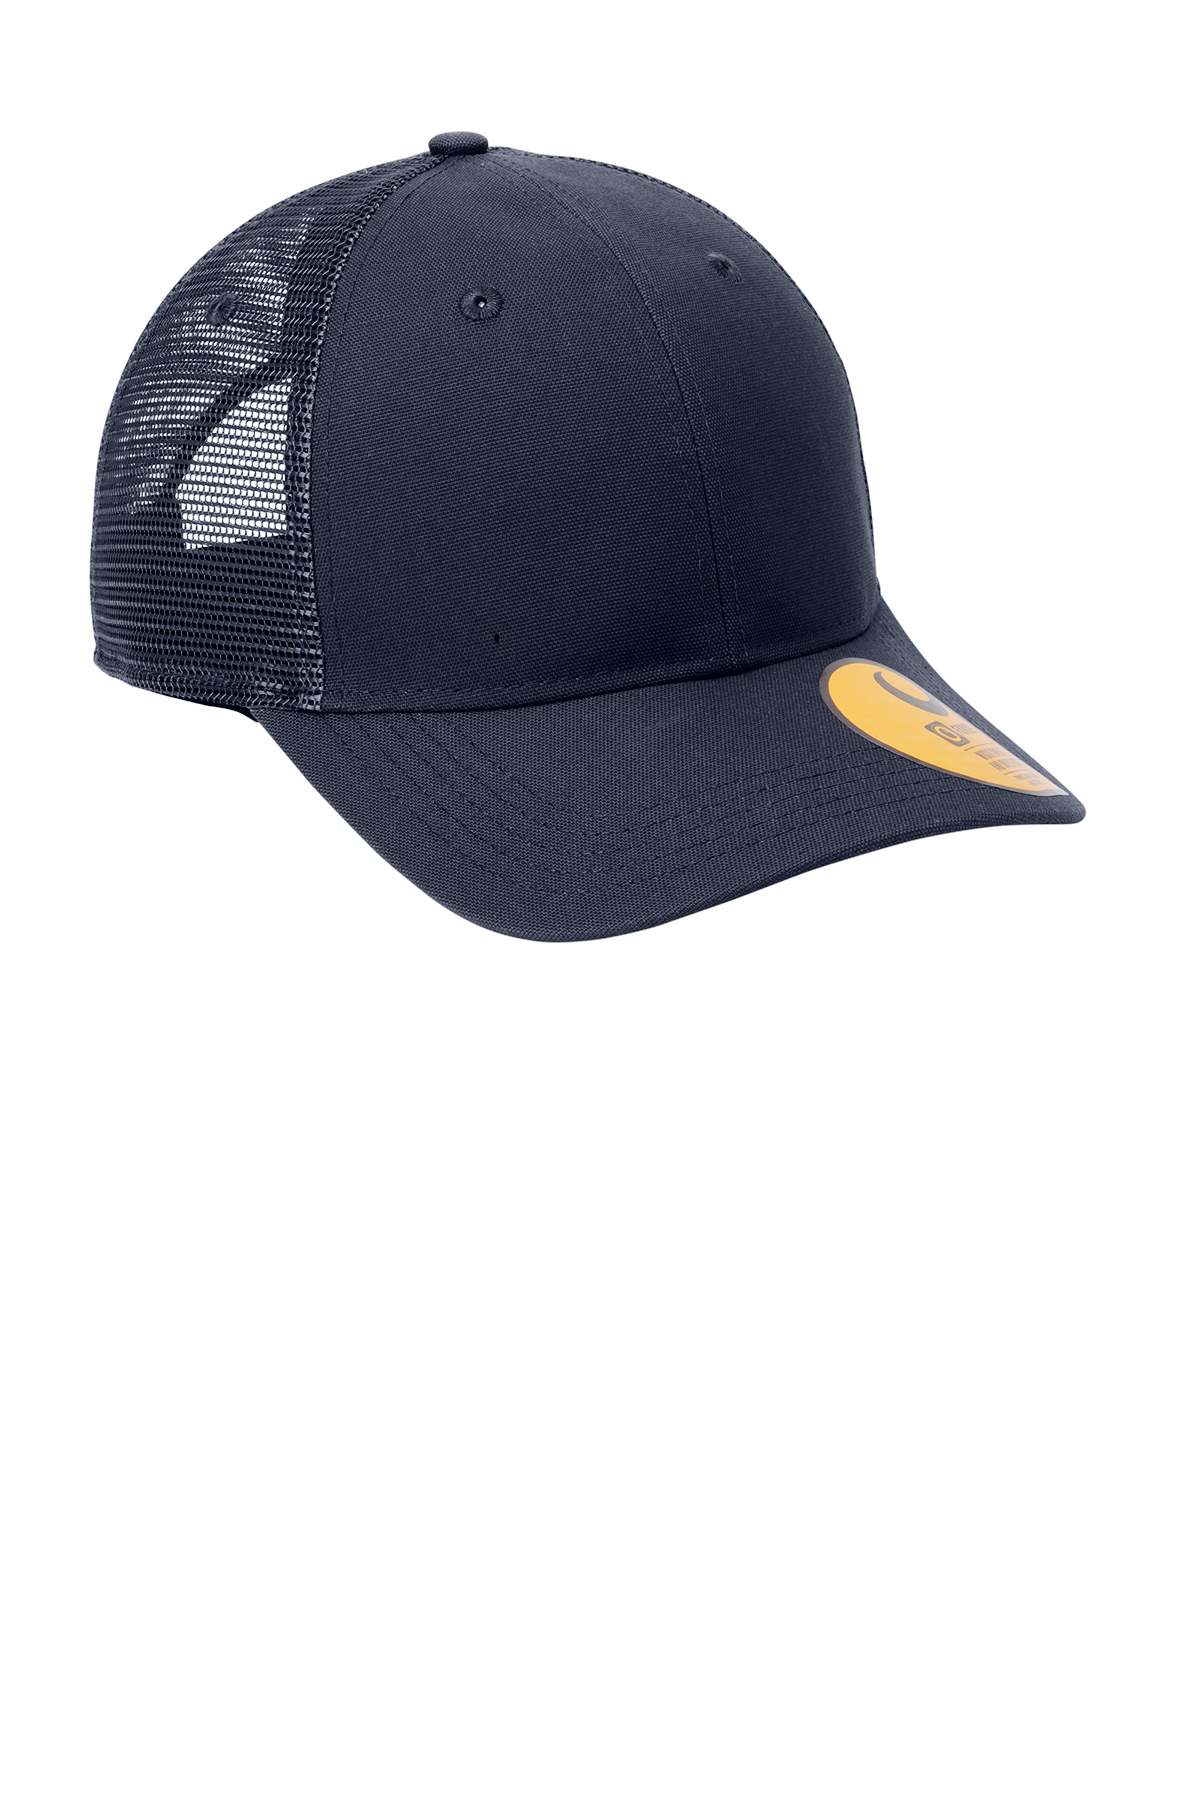 Carhartt Rugged Professional Series Cap, Product